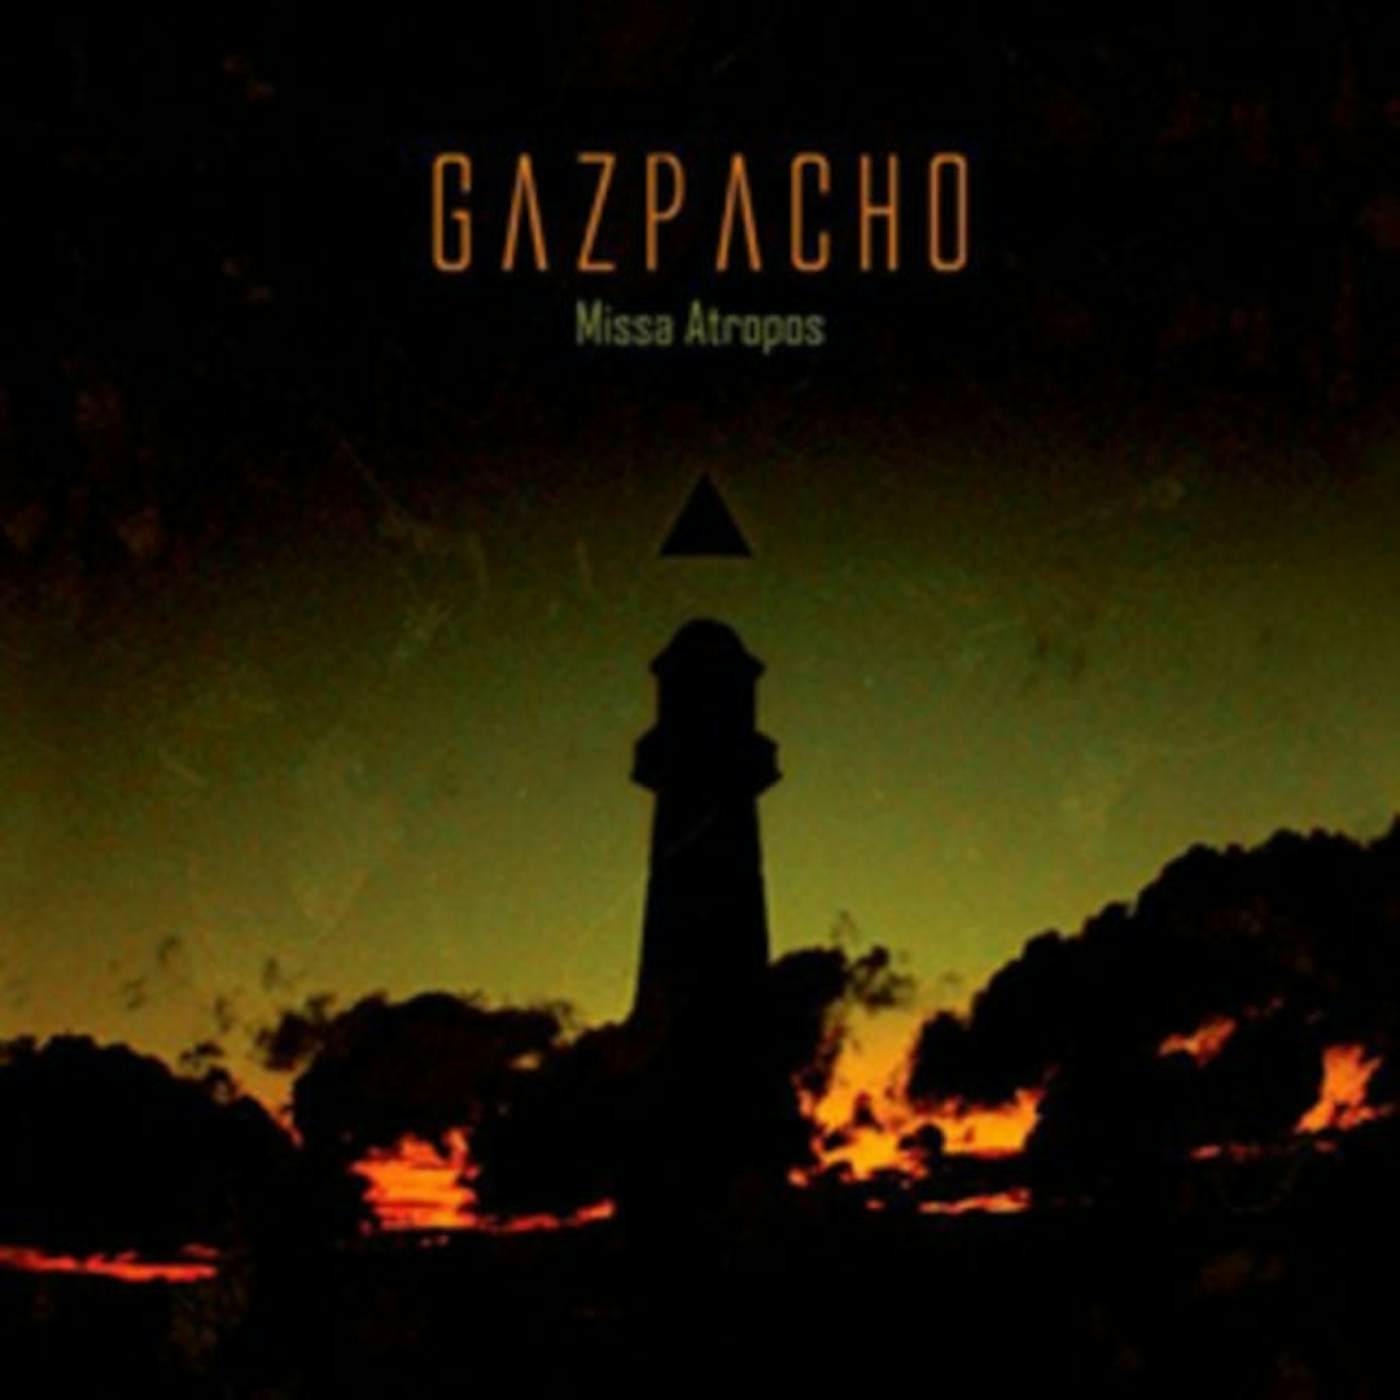 Gazpacho CD - Missa Atropos